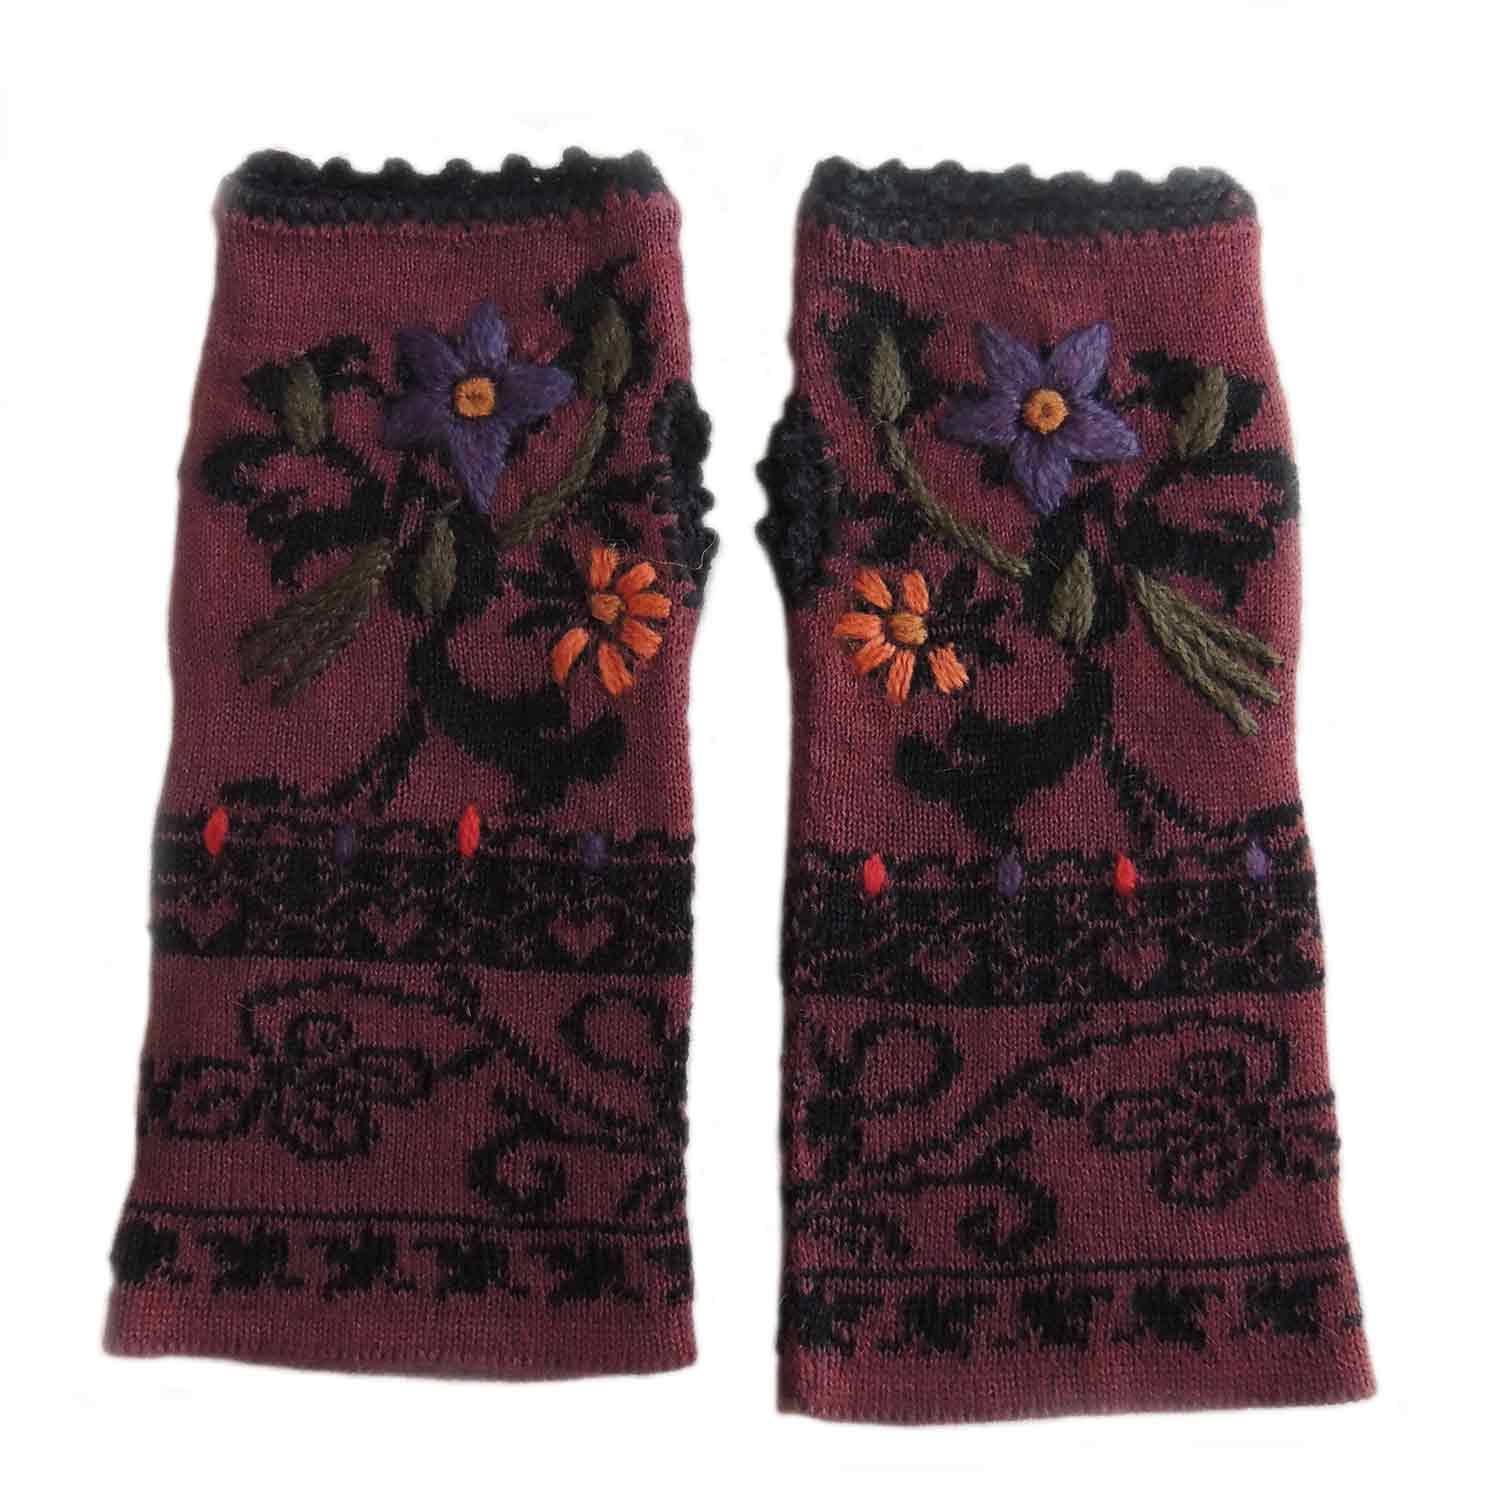 PopsFL Wirst warmers, fingerless gloves with embroidered flower detail, alpaca blend